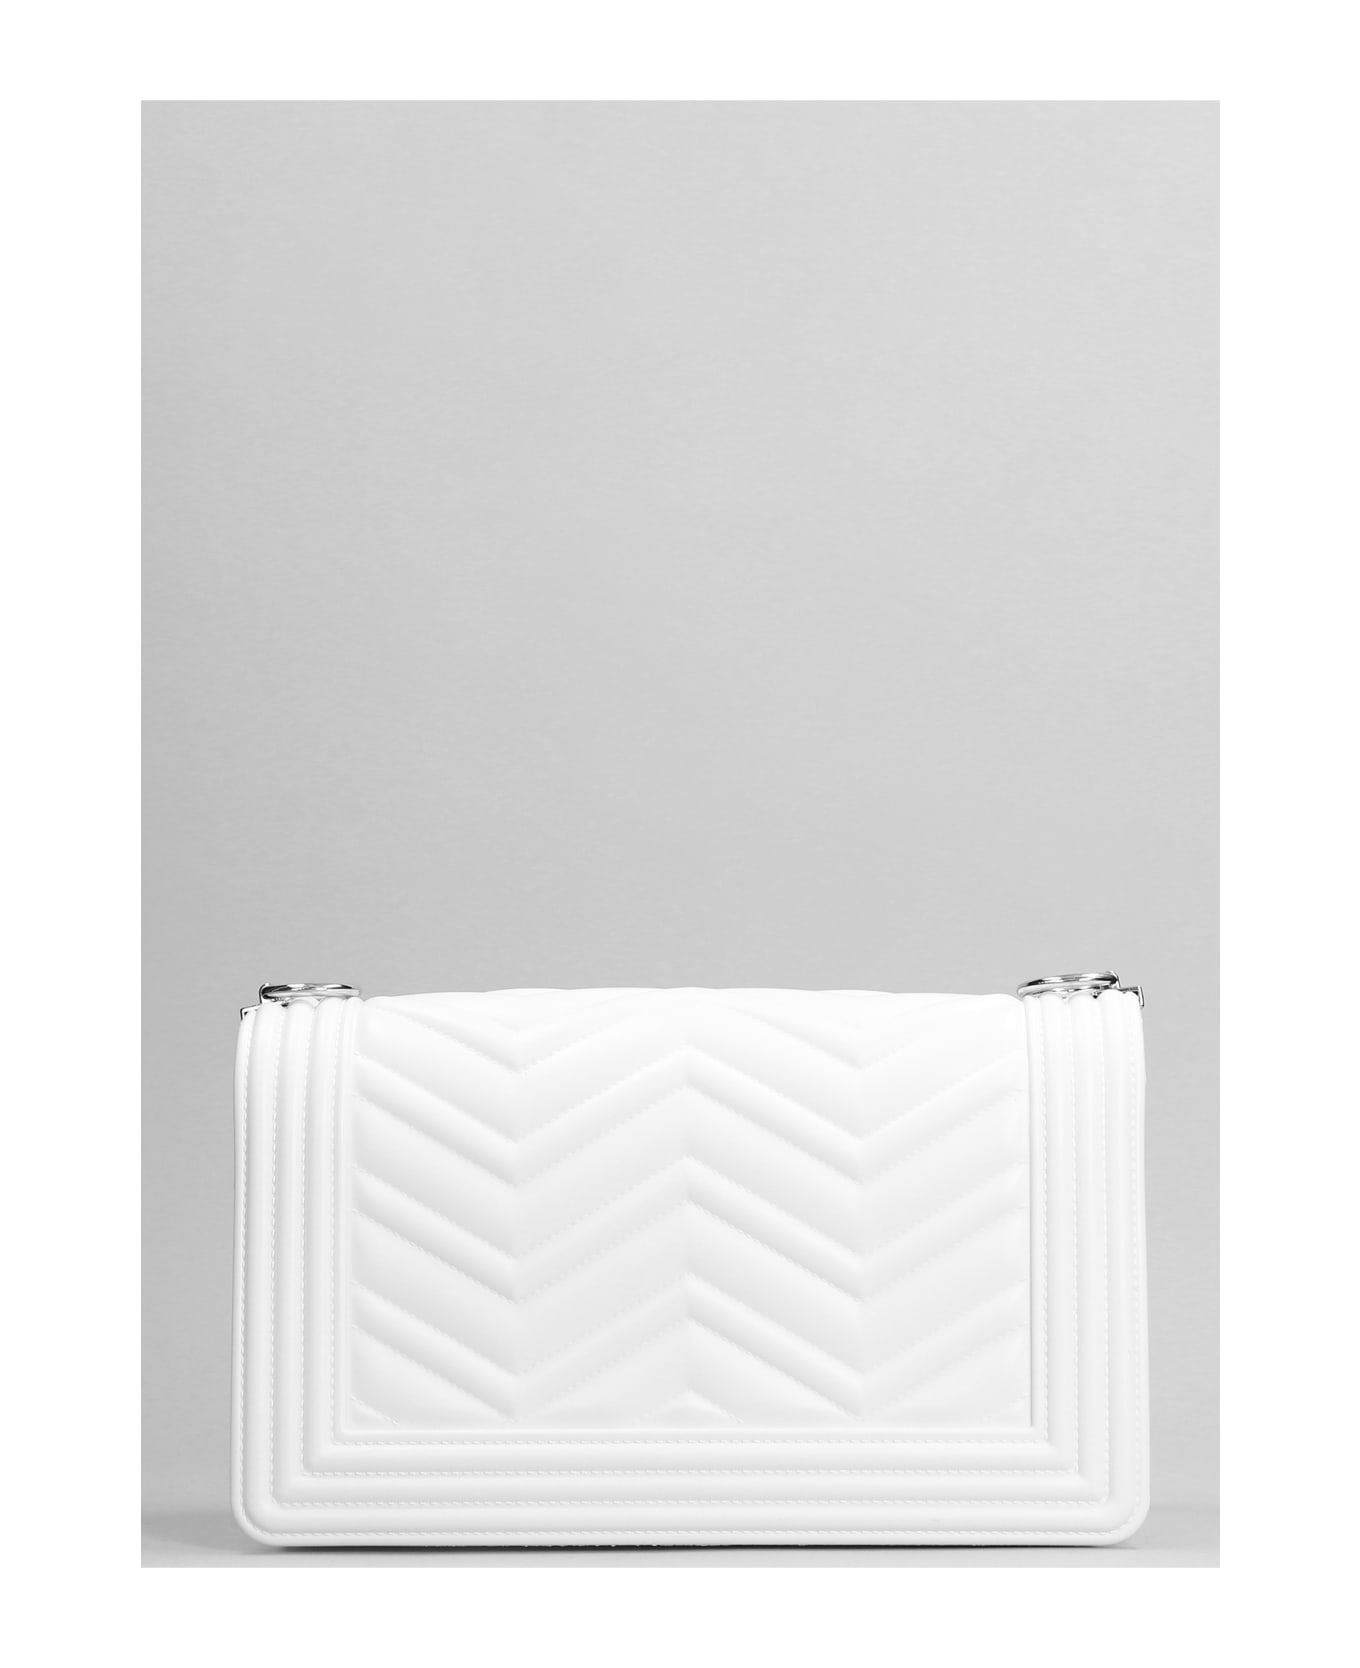 Marc Ellis Flat M Manhattan Shoulder Bag In White Pvc - white